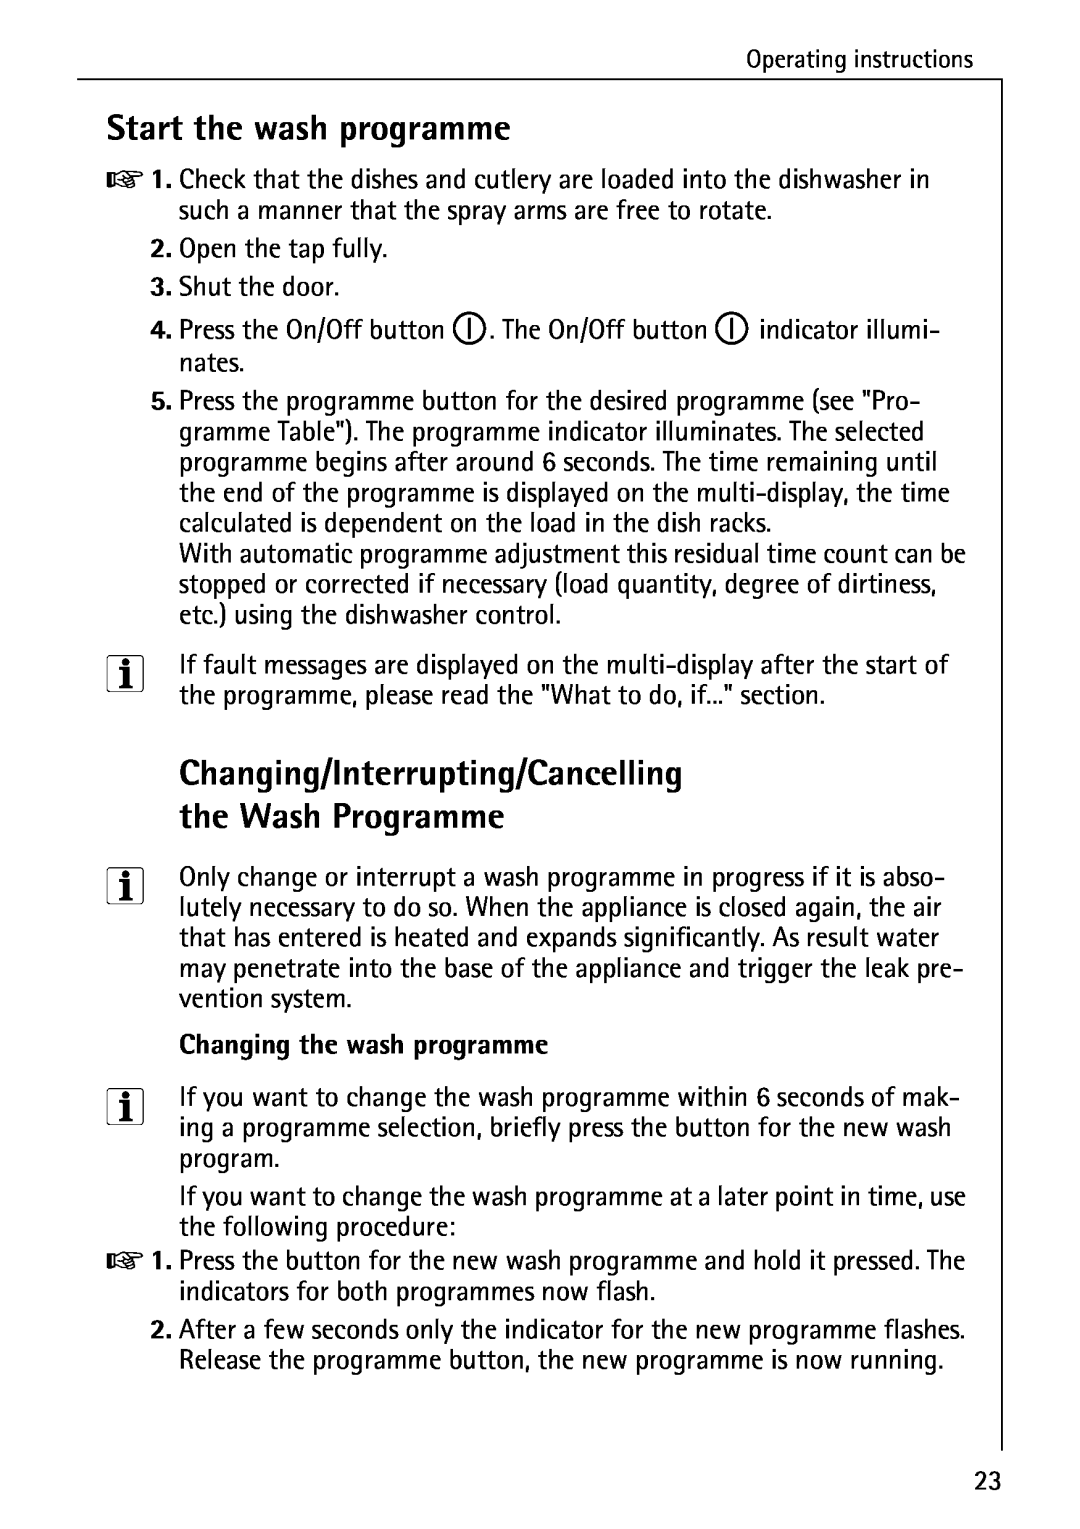 AEG 6281 I Start the wash programme, Changing/Interrupting/Cancelling, the Wash Programme, Changing the wash programme 